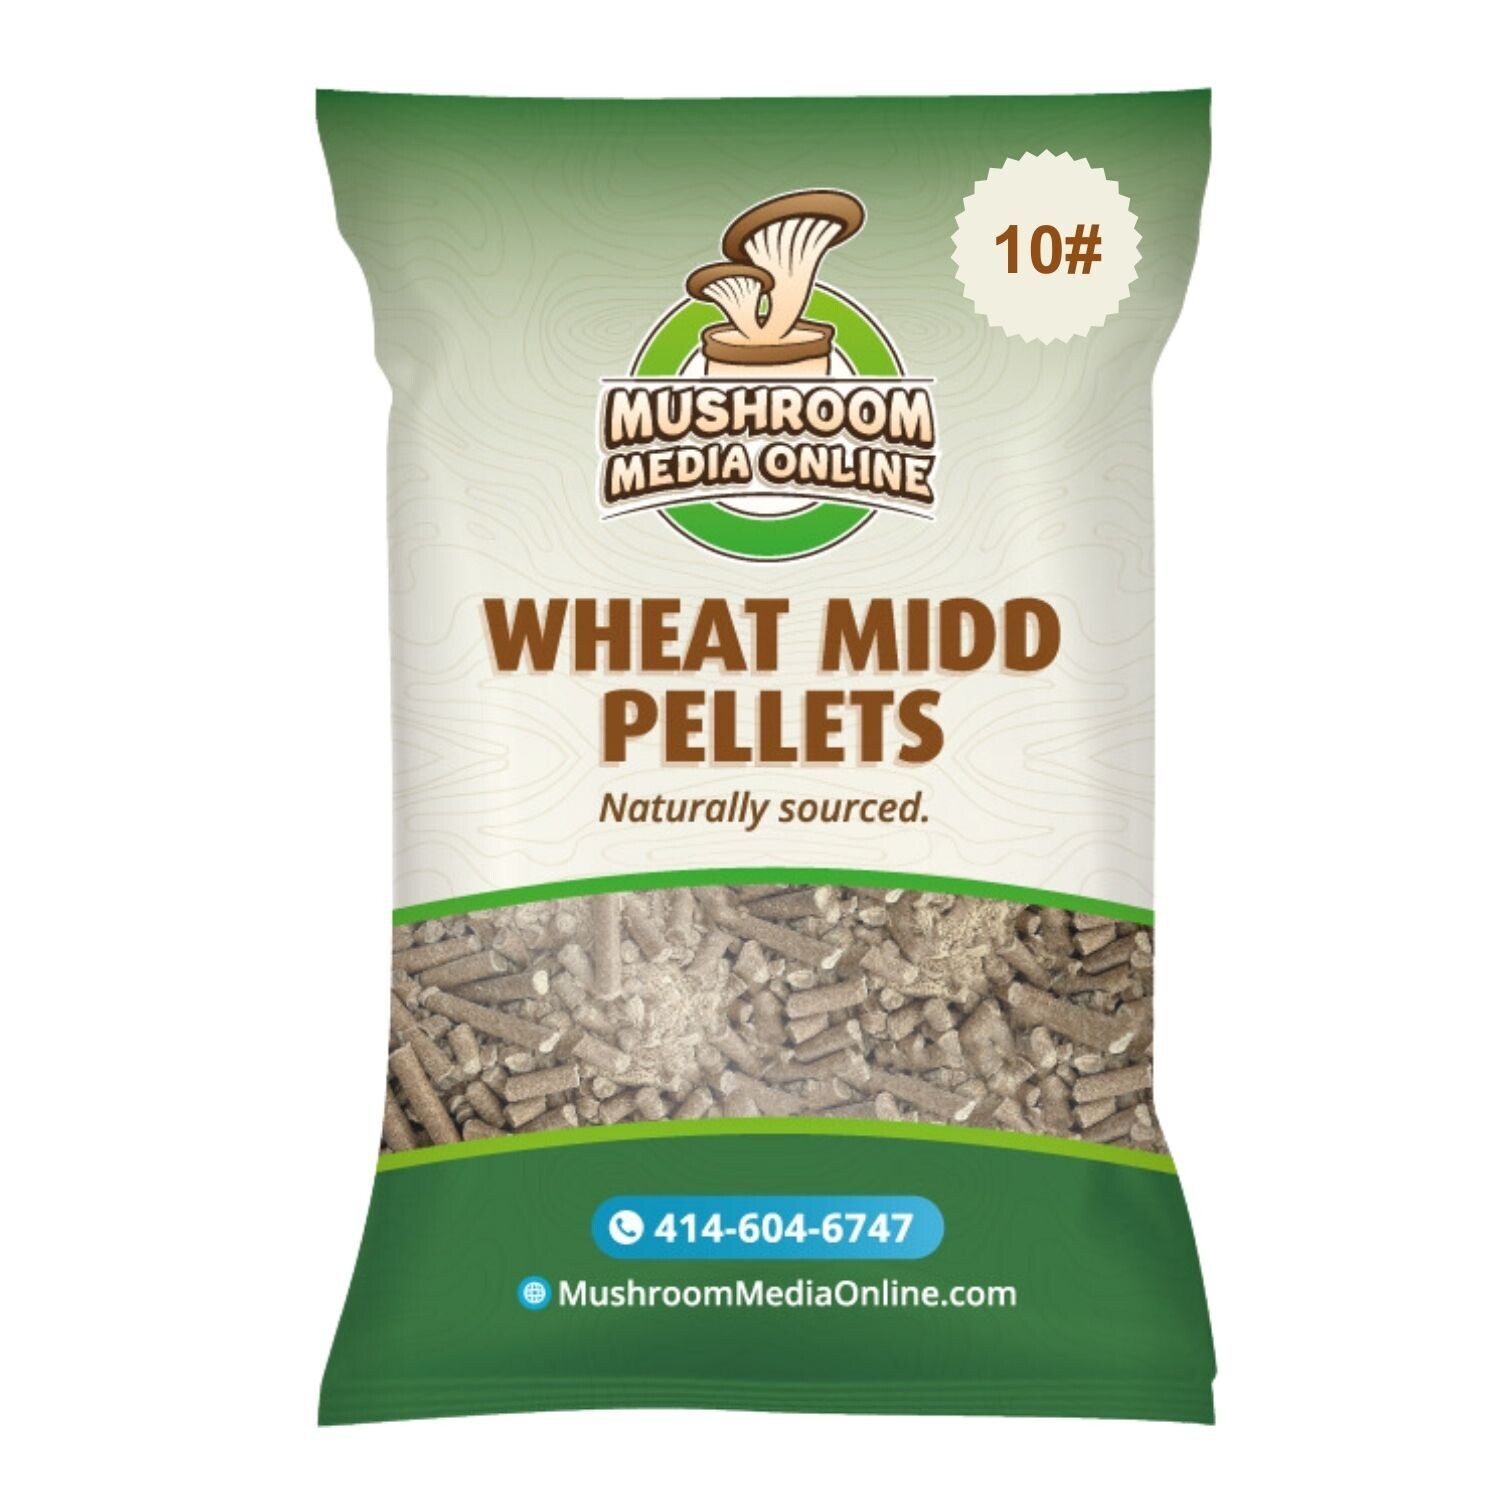 Wheat Midd Pellets - 10 Pound